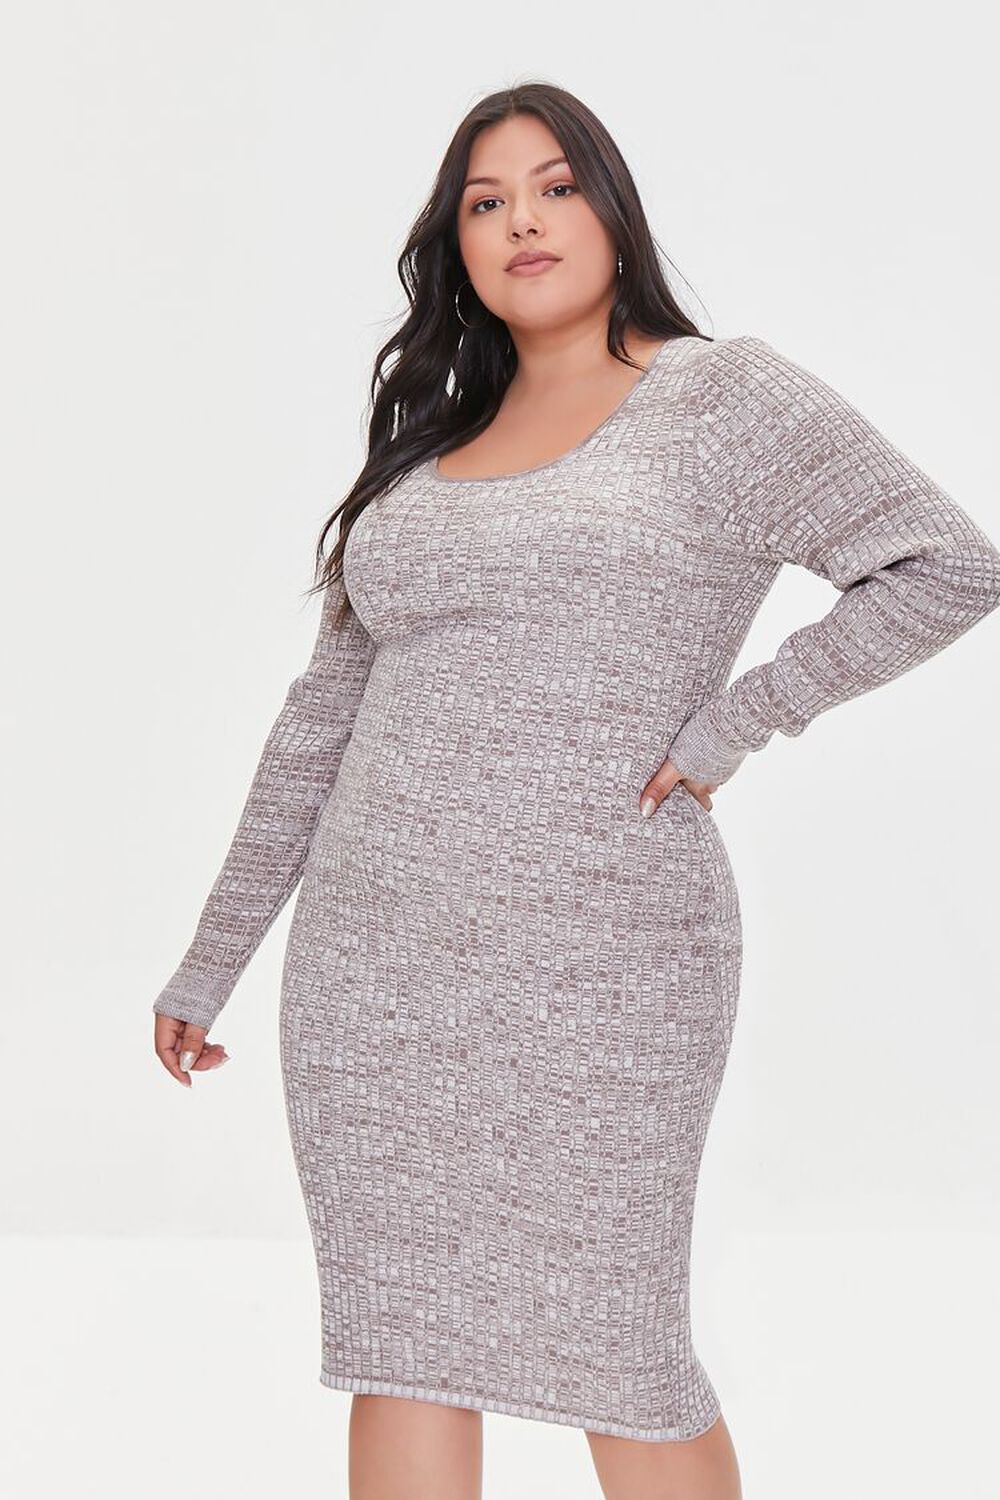 Plus Size Marled Sweater Dress, image 1